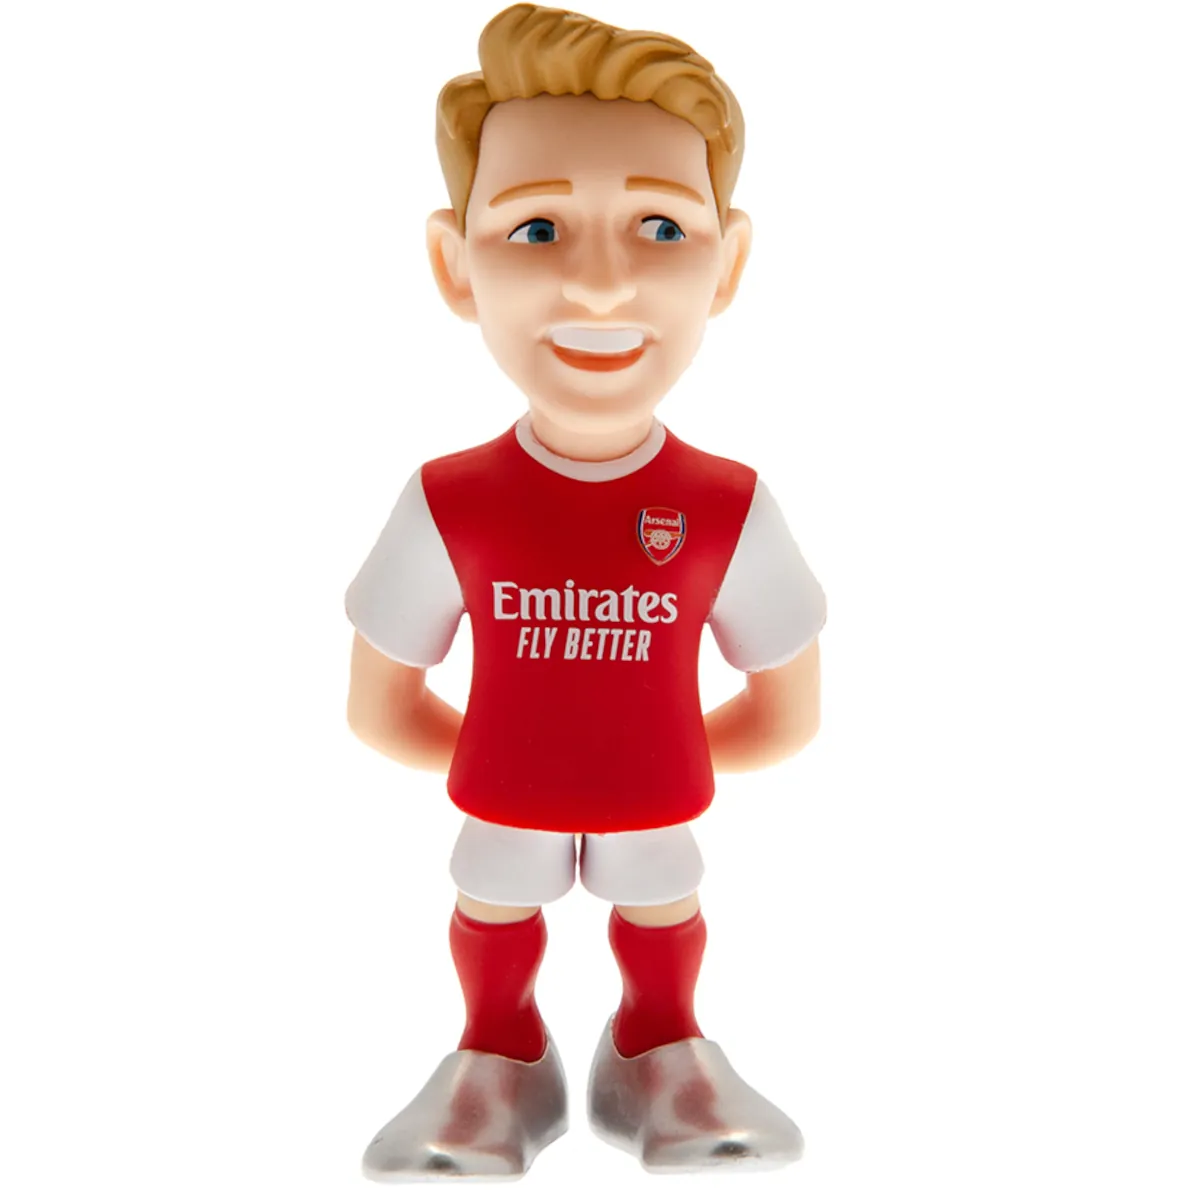 Arsenal FC SoccerStarz Saka - Select Sports Souvenirs